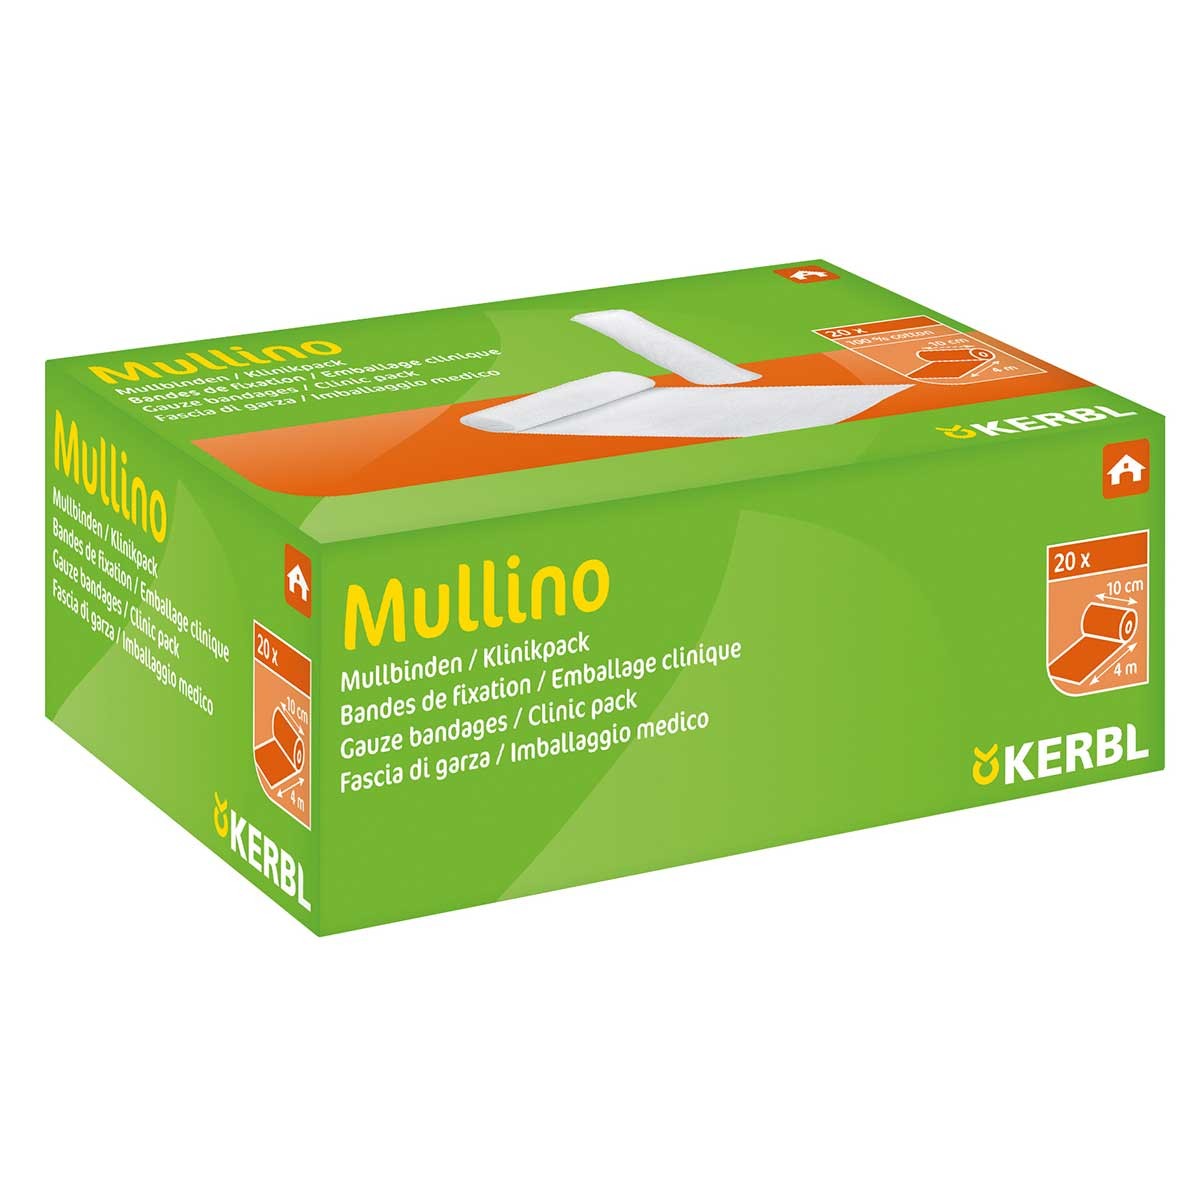 20x Mullbinde Mullino